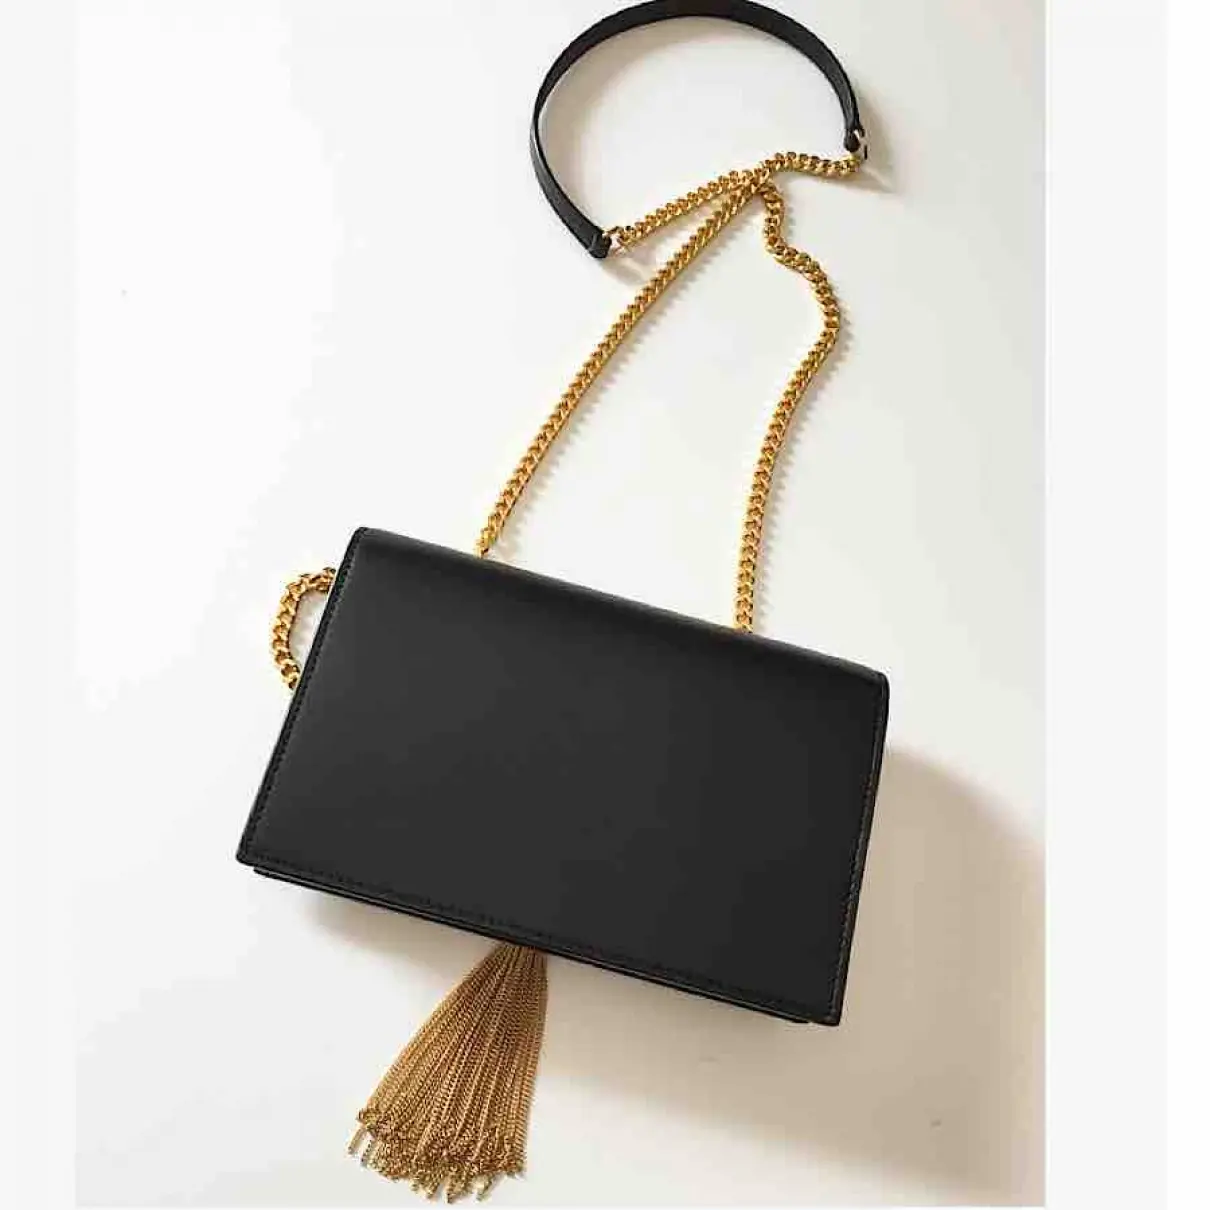 Buy Saint Laurent Pompom Kate leather clutch bag online